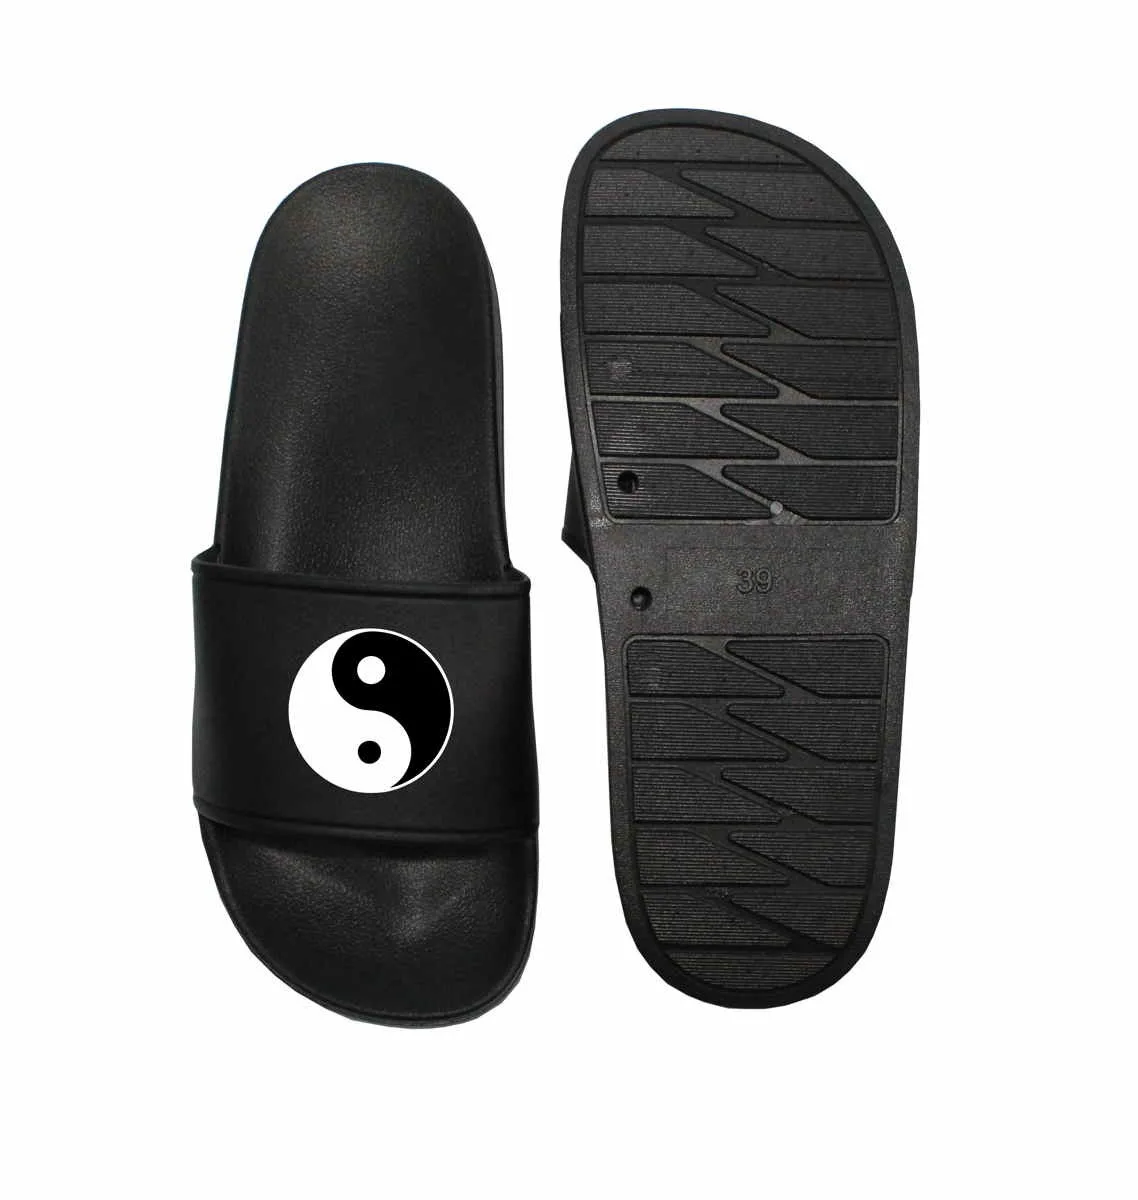 Bath slippers Ying Yang black